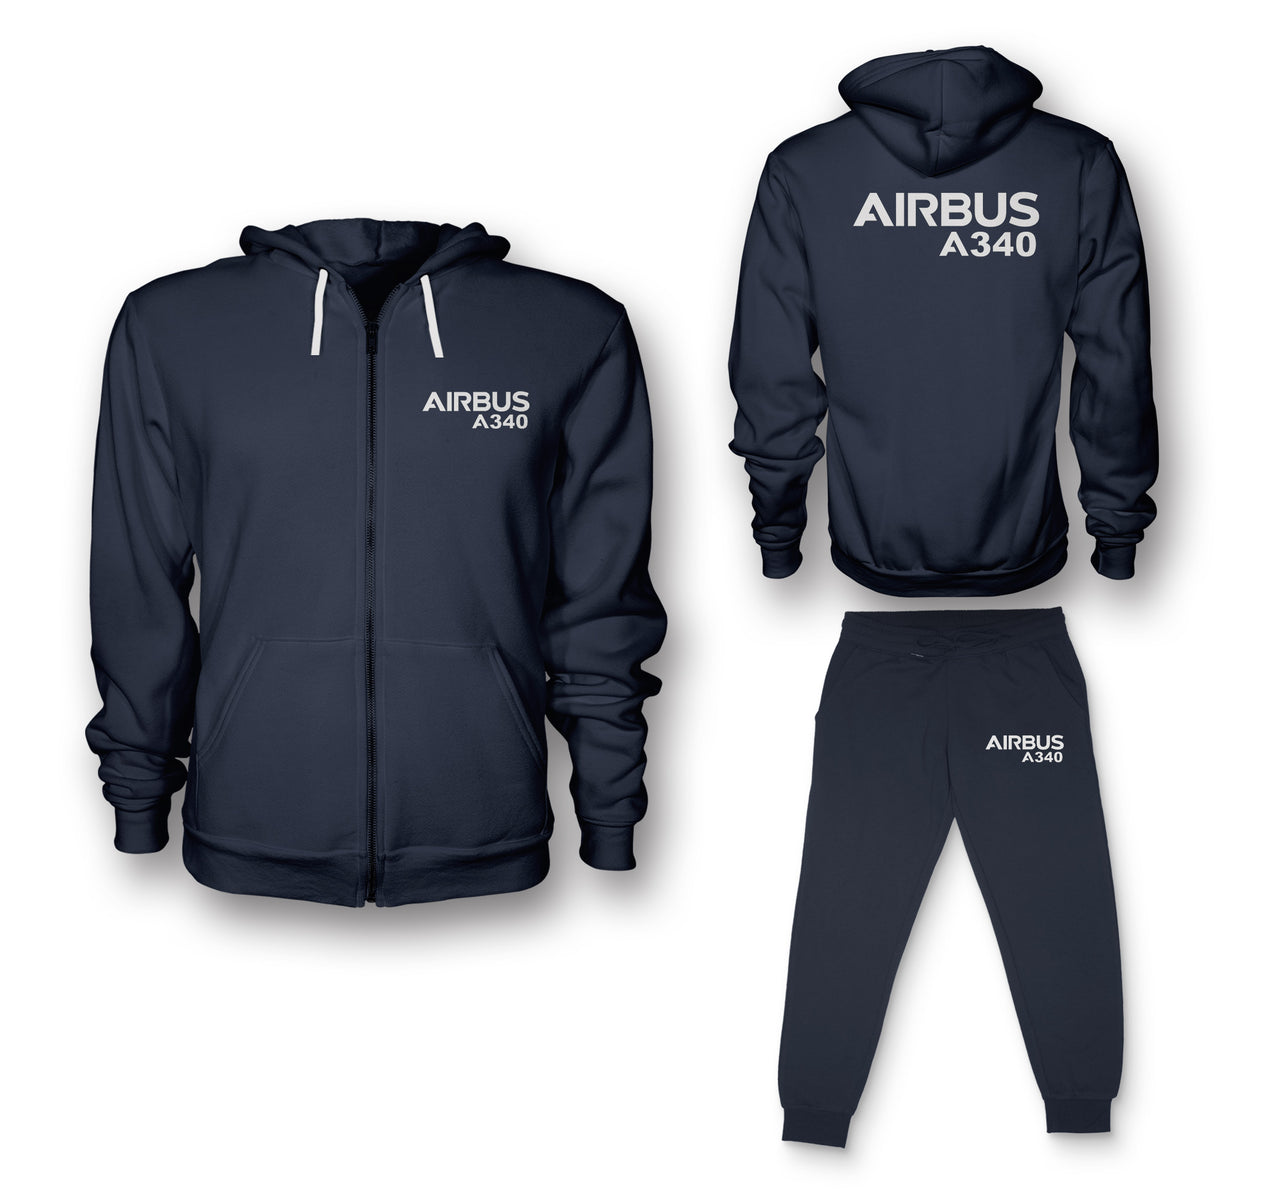 Airbus A340 & Text Designed Zipped Hoodies & Sweatpants Set